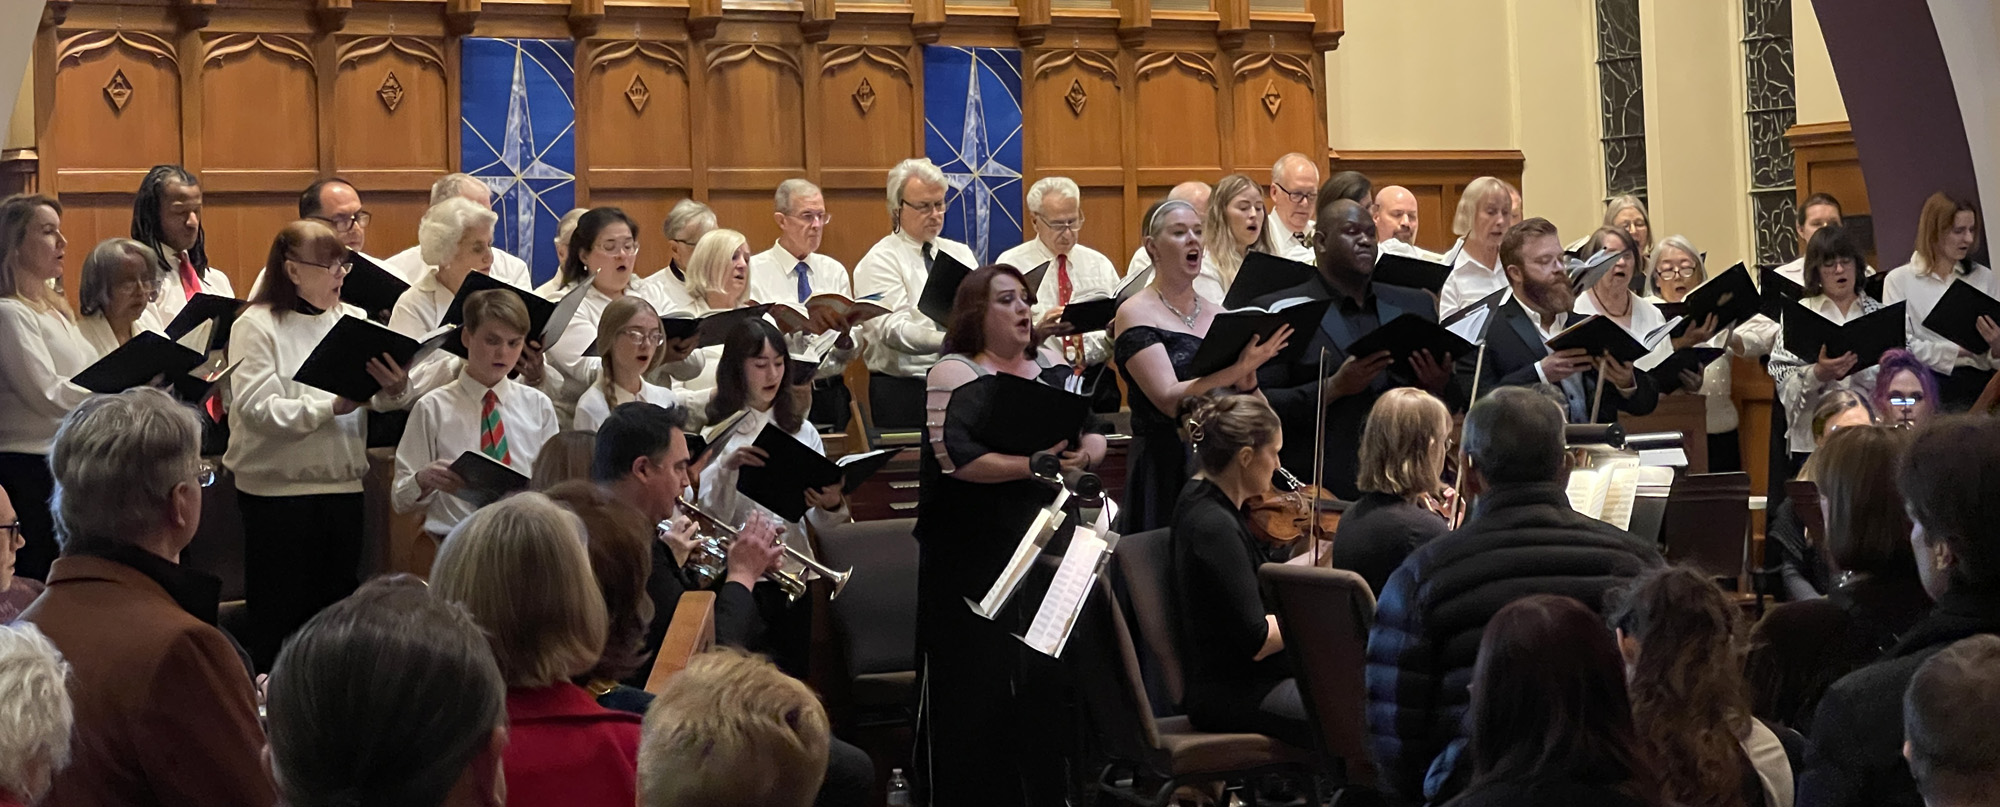 2023 Handel's Messiah at Riverside Presbyterian Church (USA) in Riverside IL